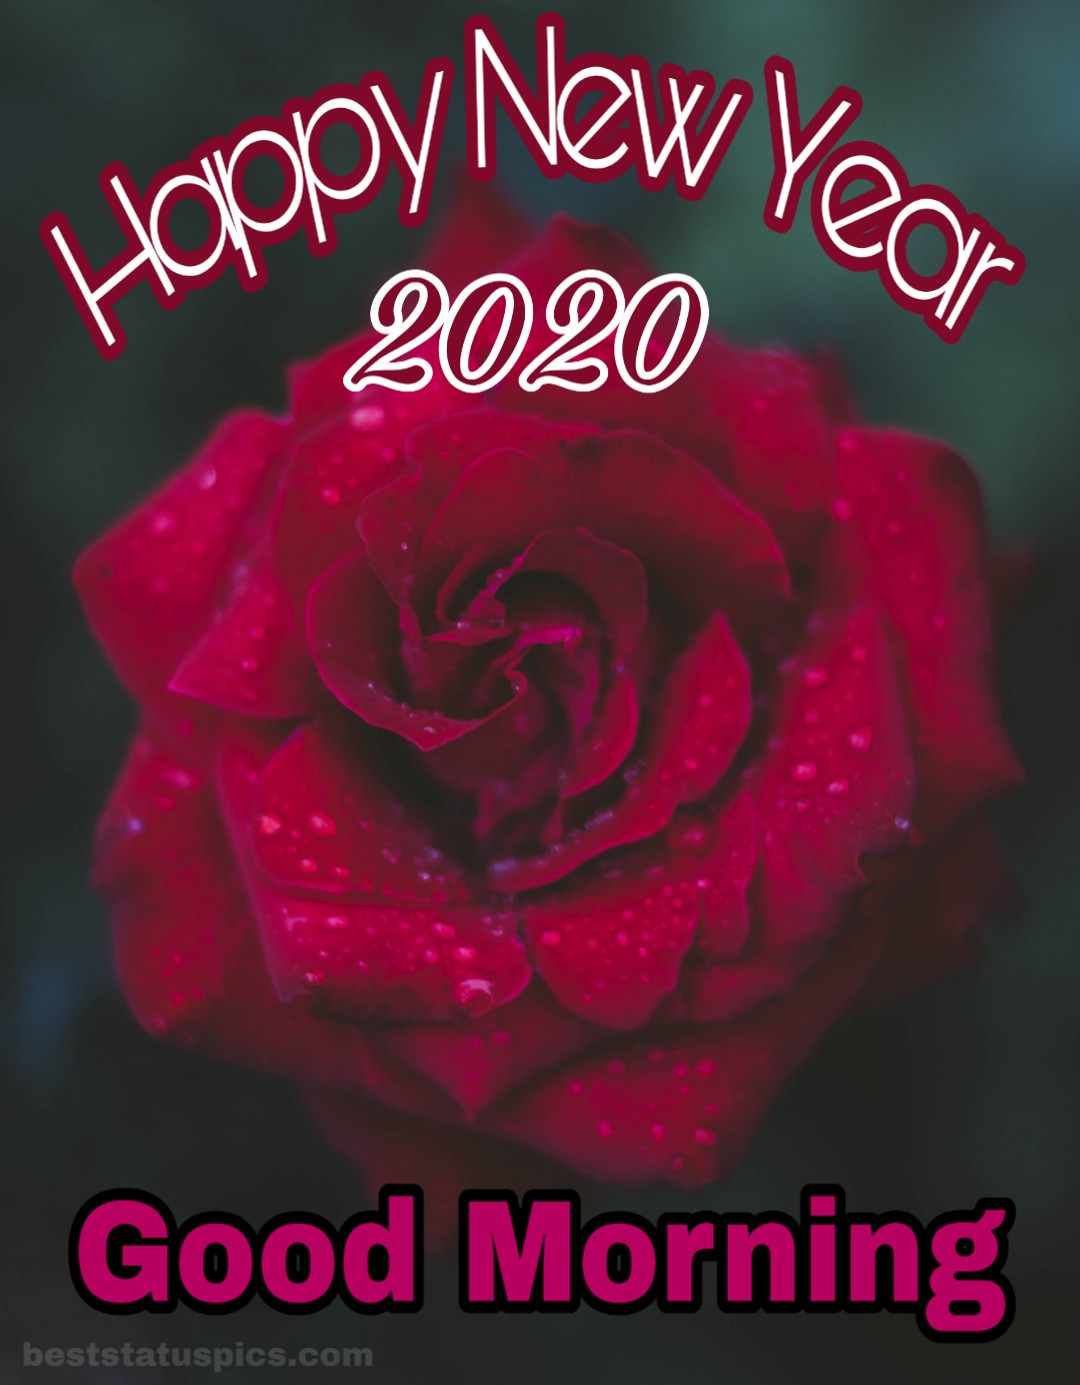 Free download Good Morning Happy New Year 2020 Whatsapp Dp Status